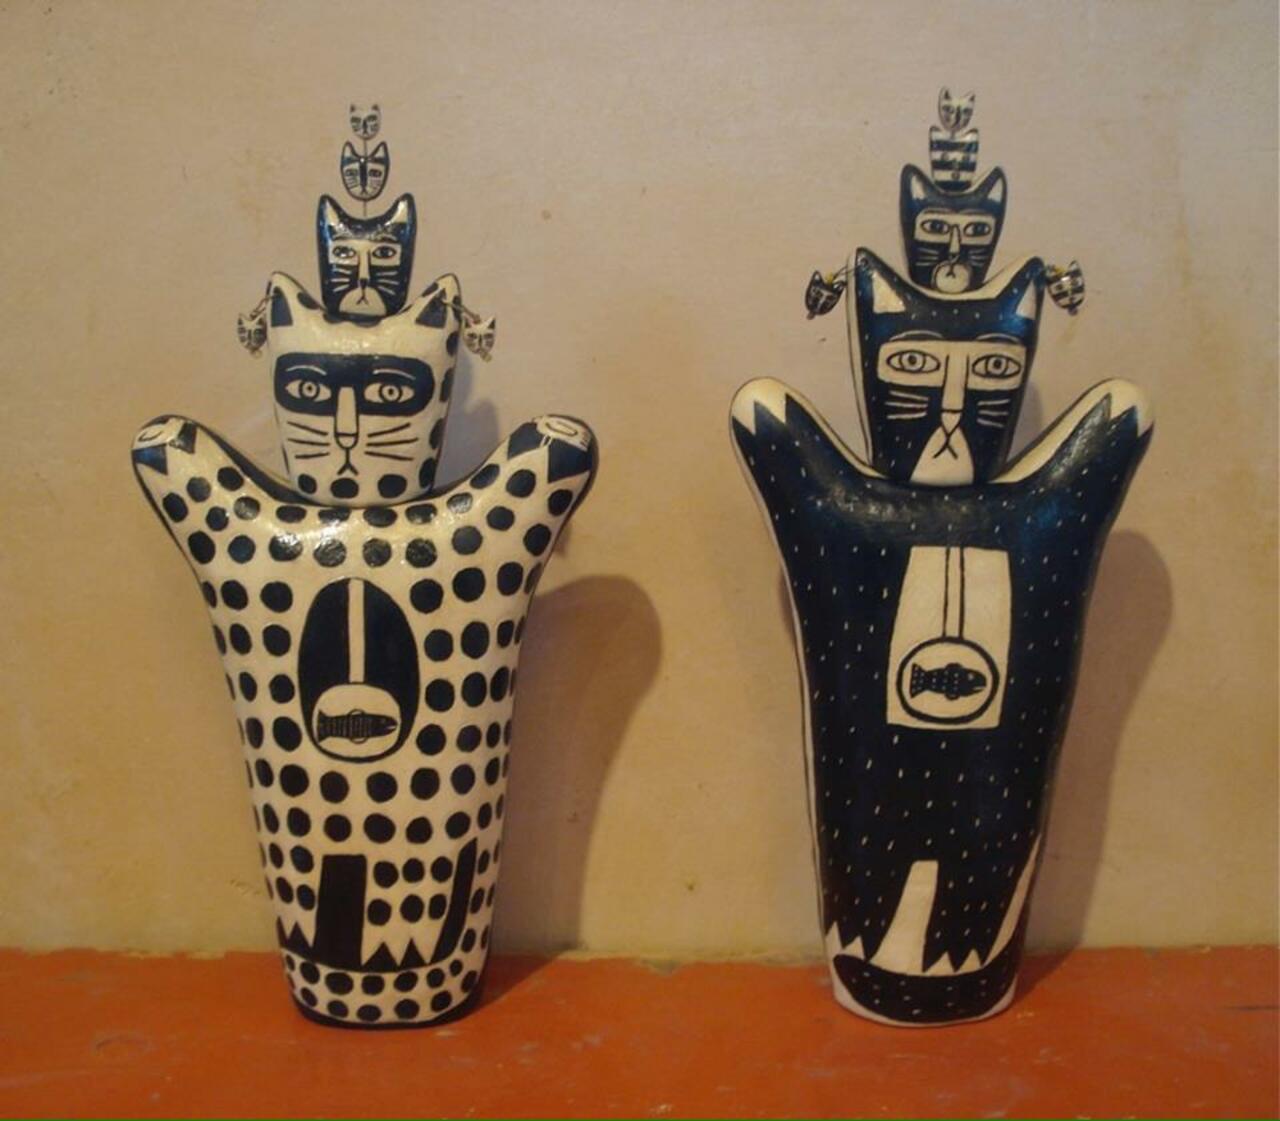 http://Www.artshackmadrid.com #art #design #ceramics #cats #stackable #unique http://t.co/5wDOXYNjjB